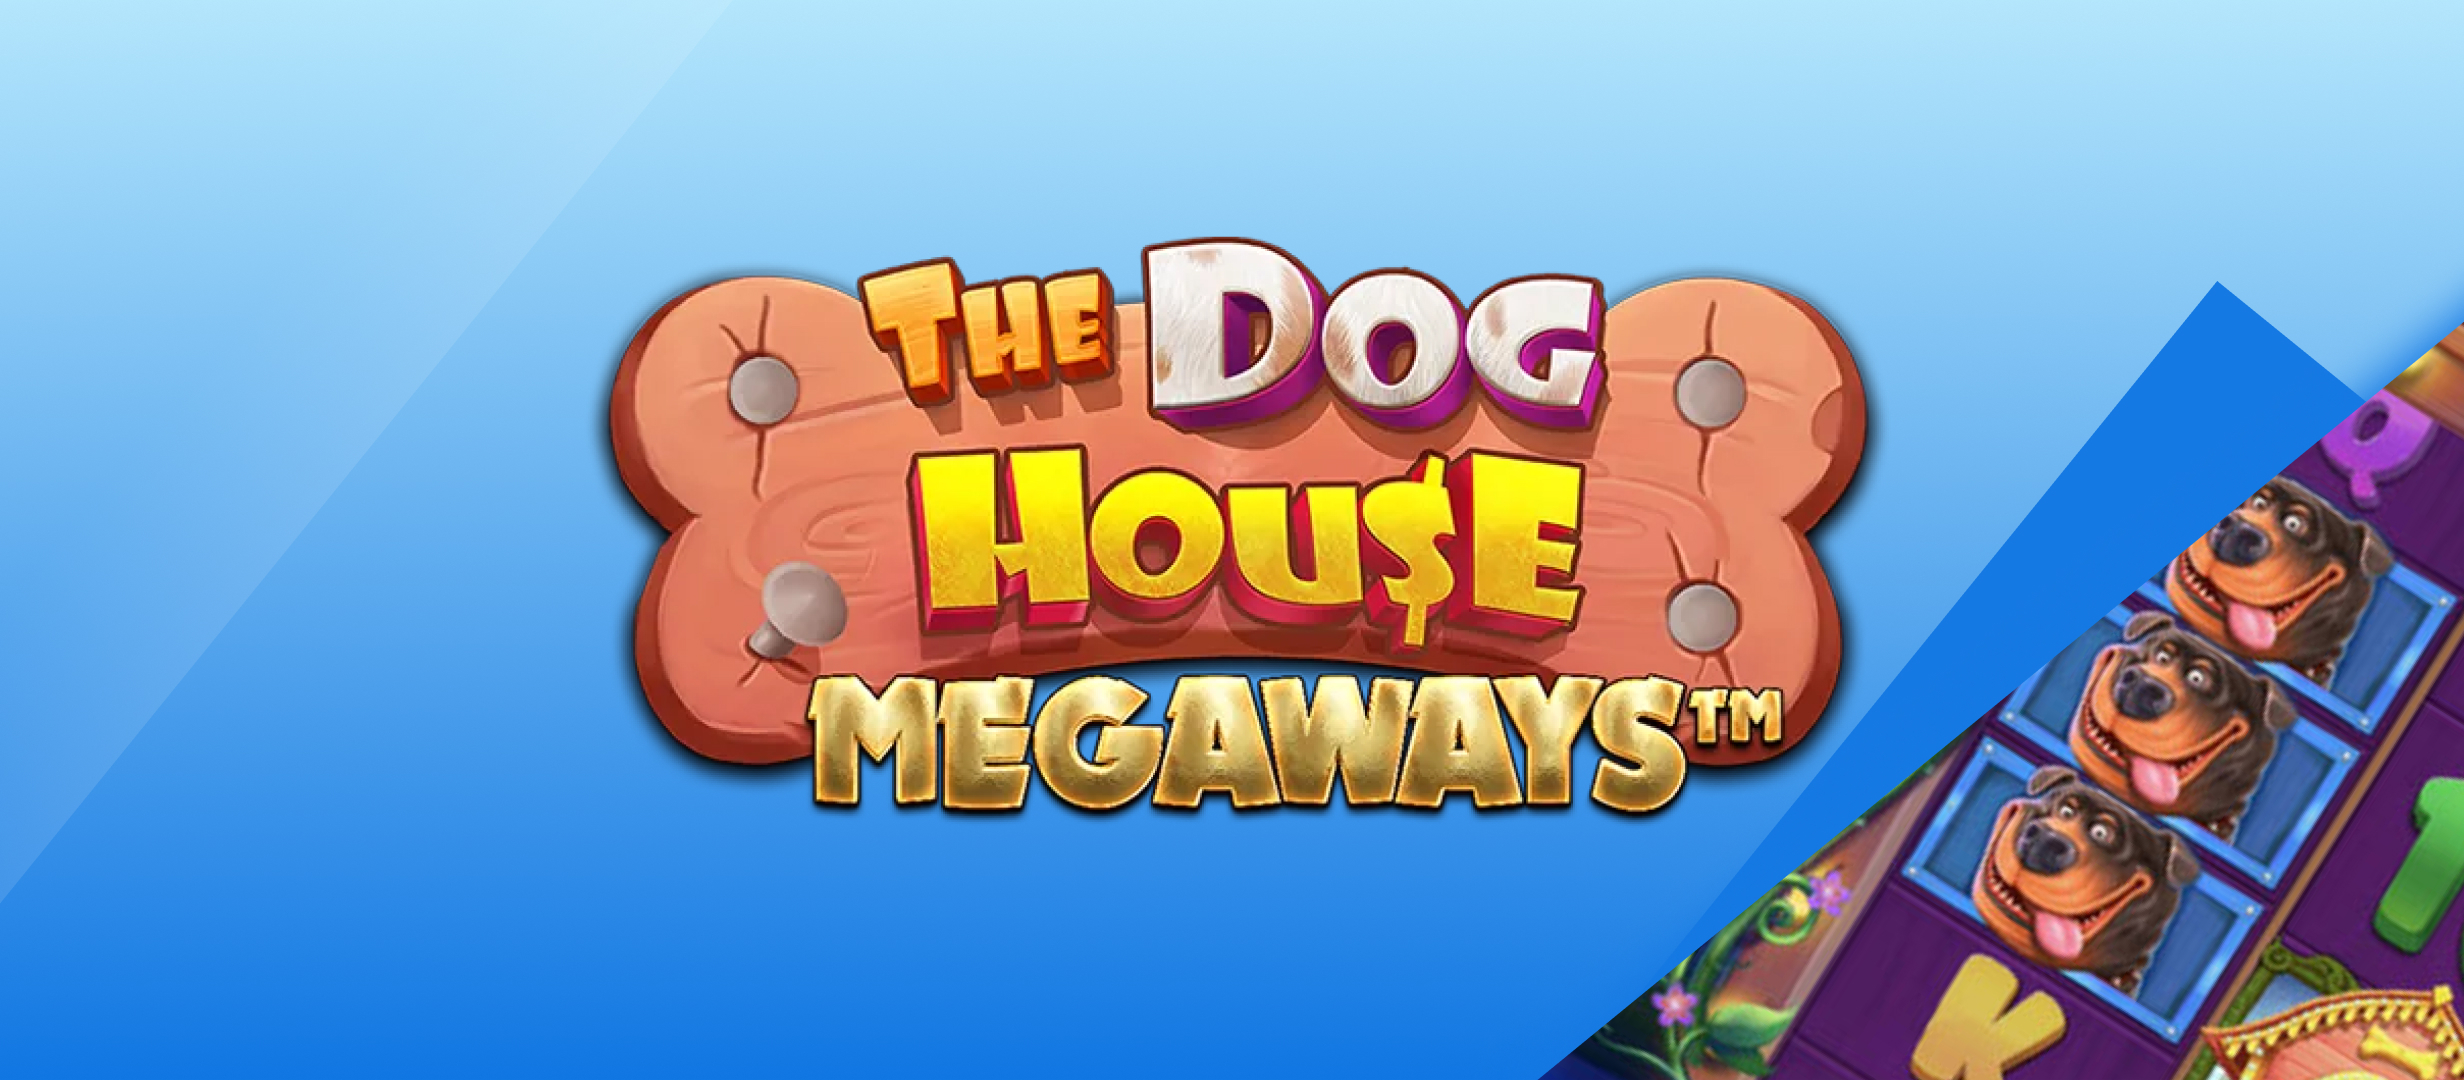 Cazino online: Sloturile lui Paul - Episodul 9 The Dog House Megaways